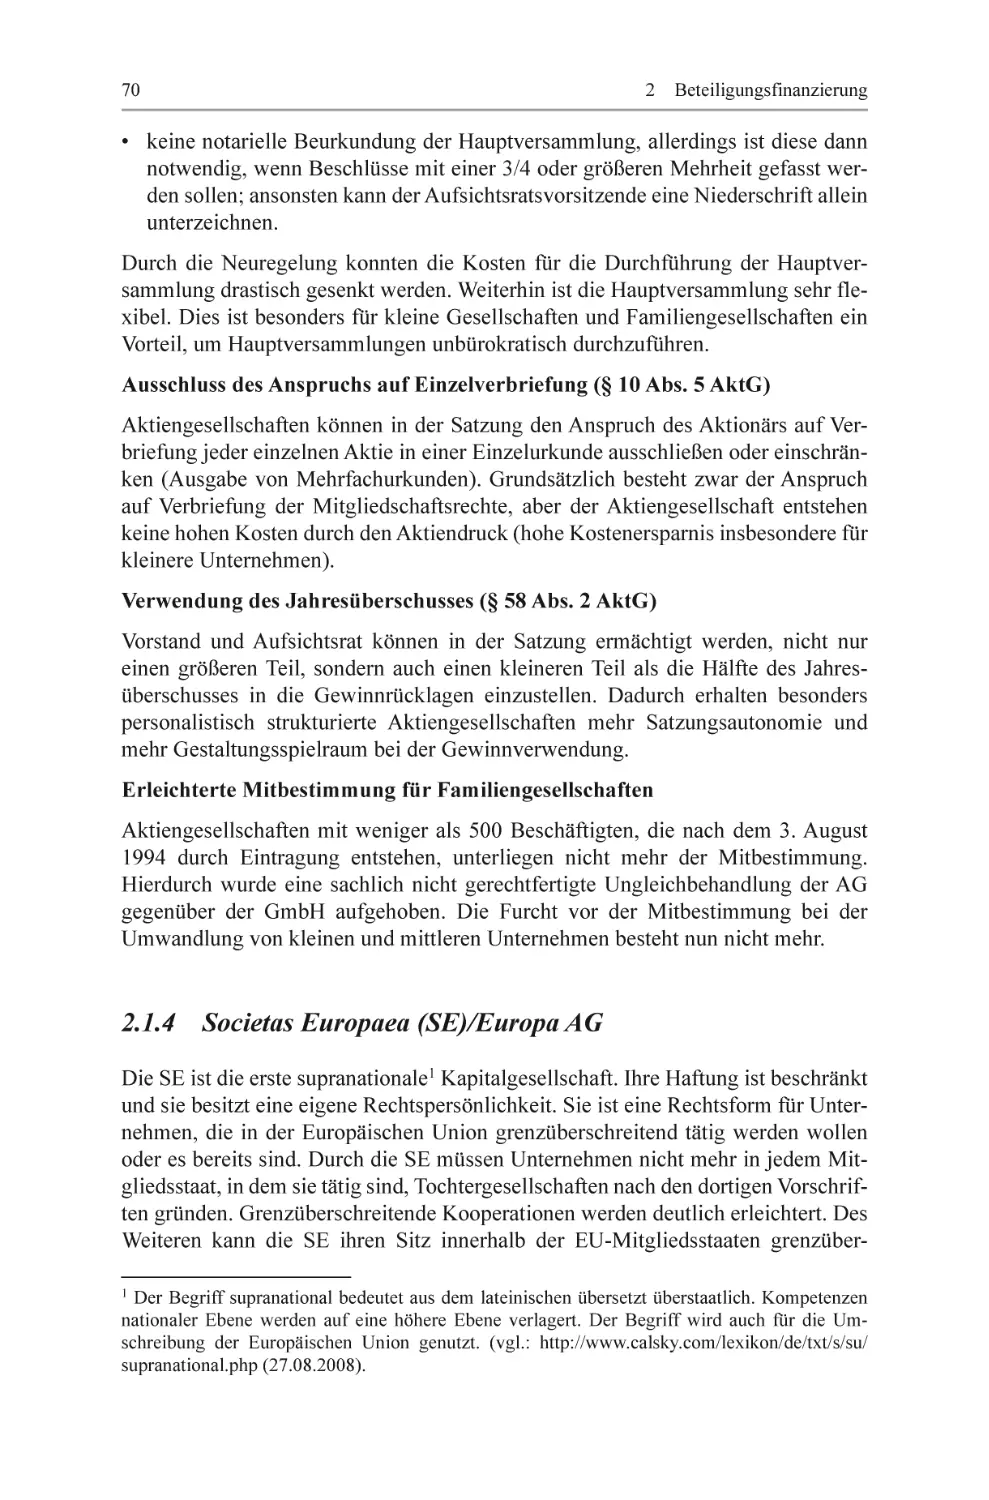 2.1.4 Societas Europaea (SE)/Europa AG